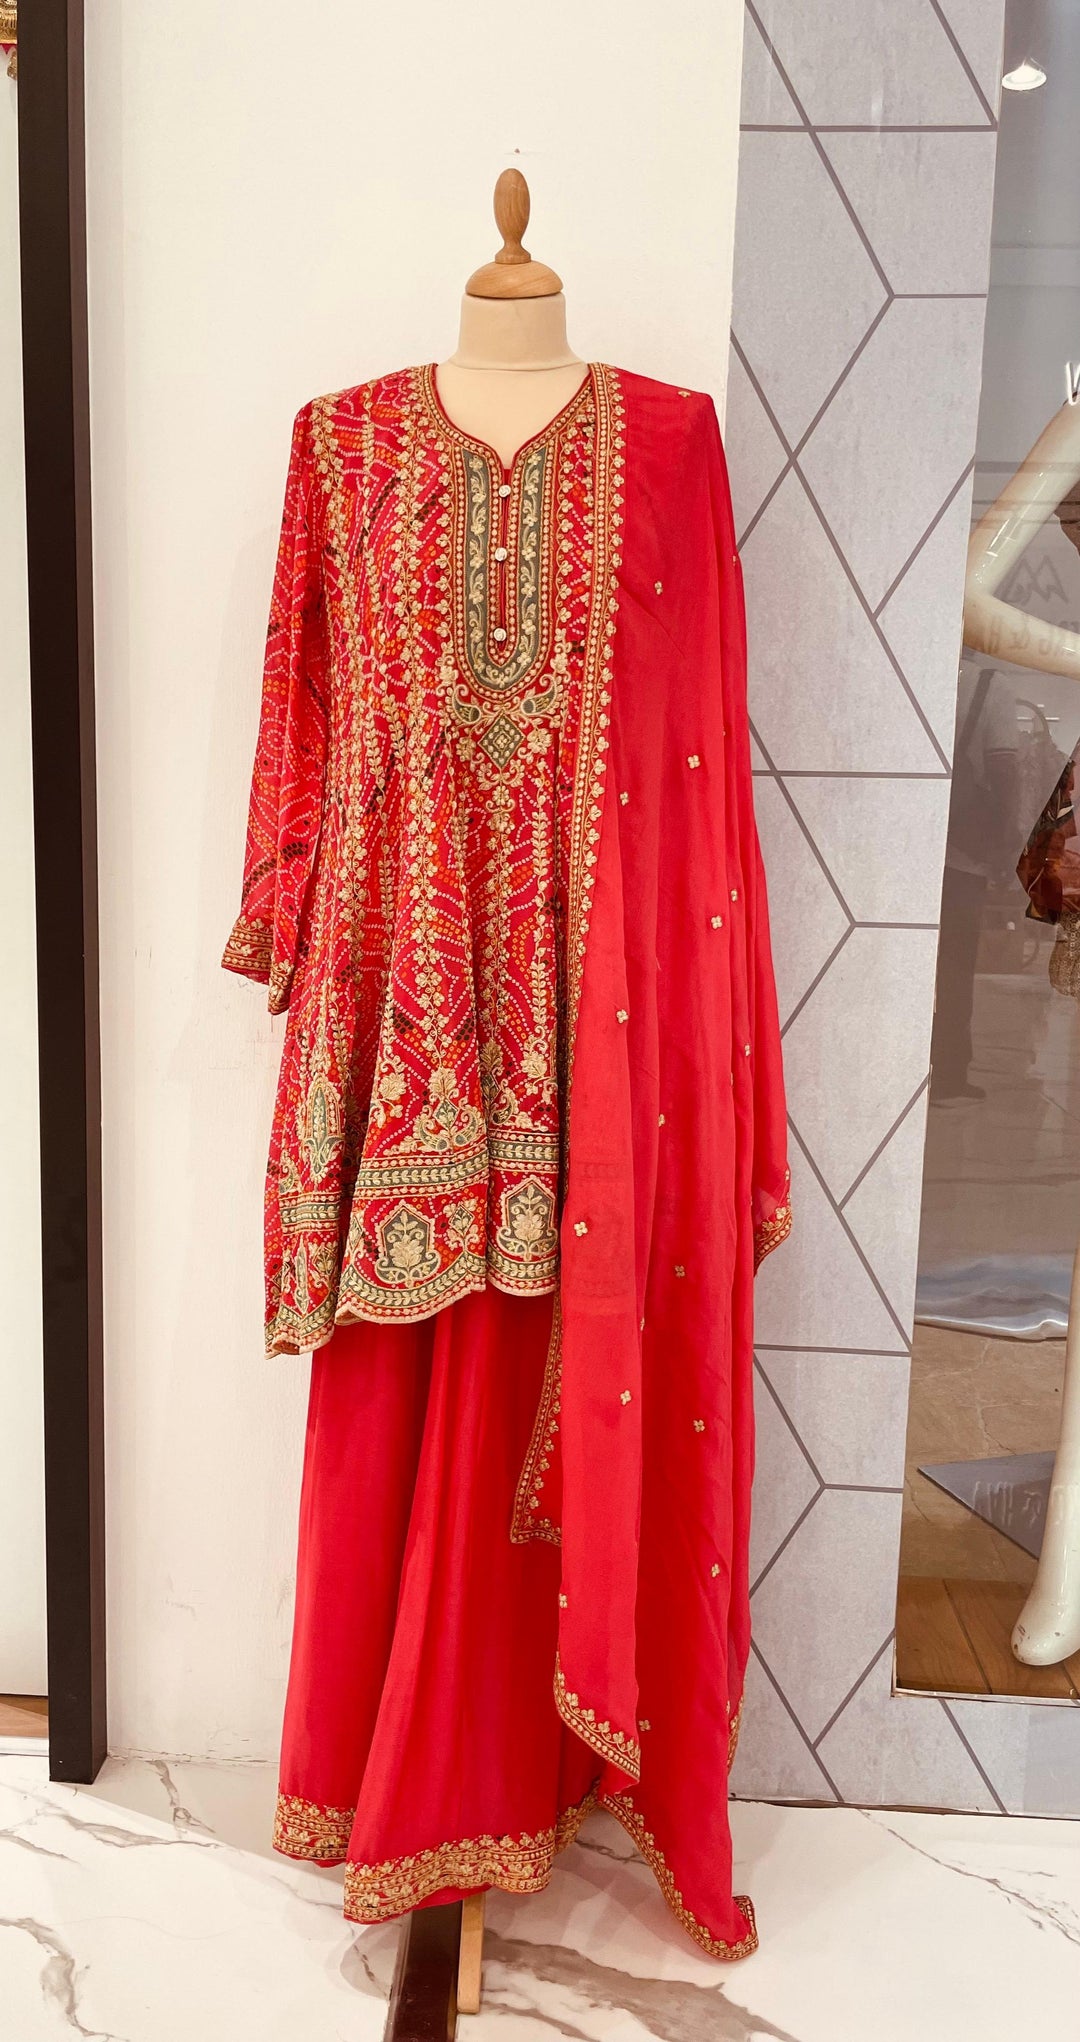 Navya Cherry Red Gota Sharara Ghararas set (Ready to Wear)